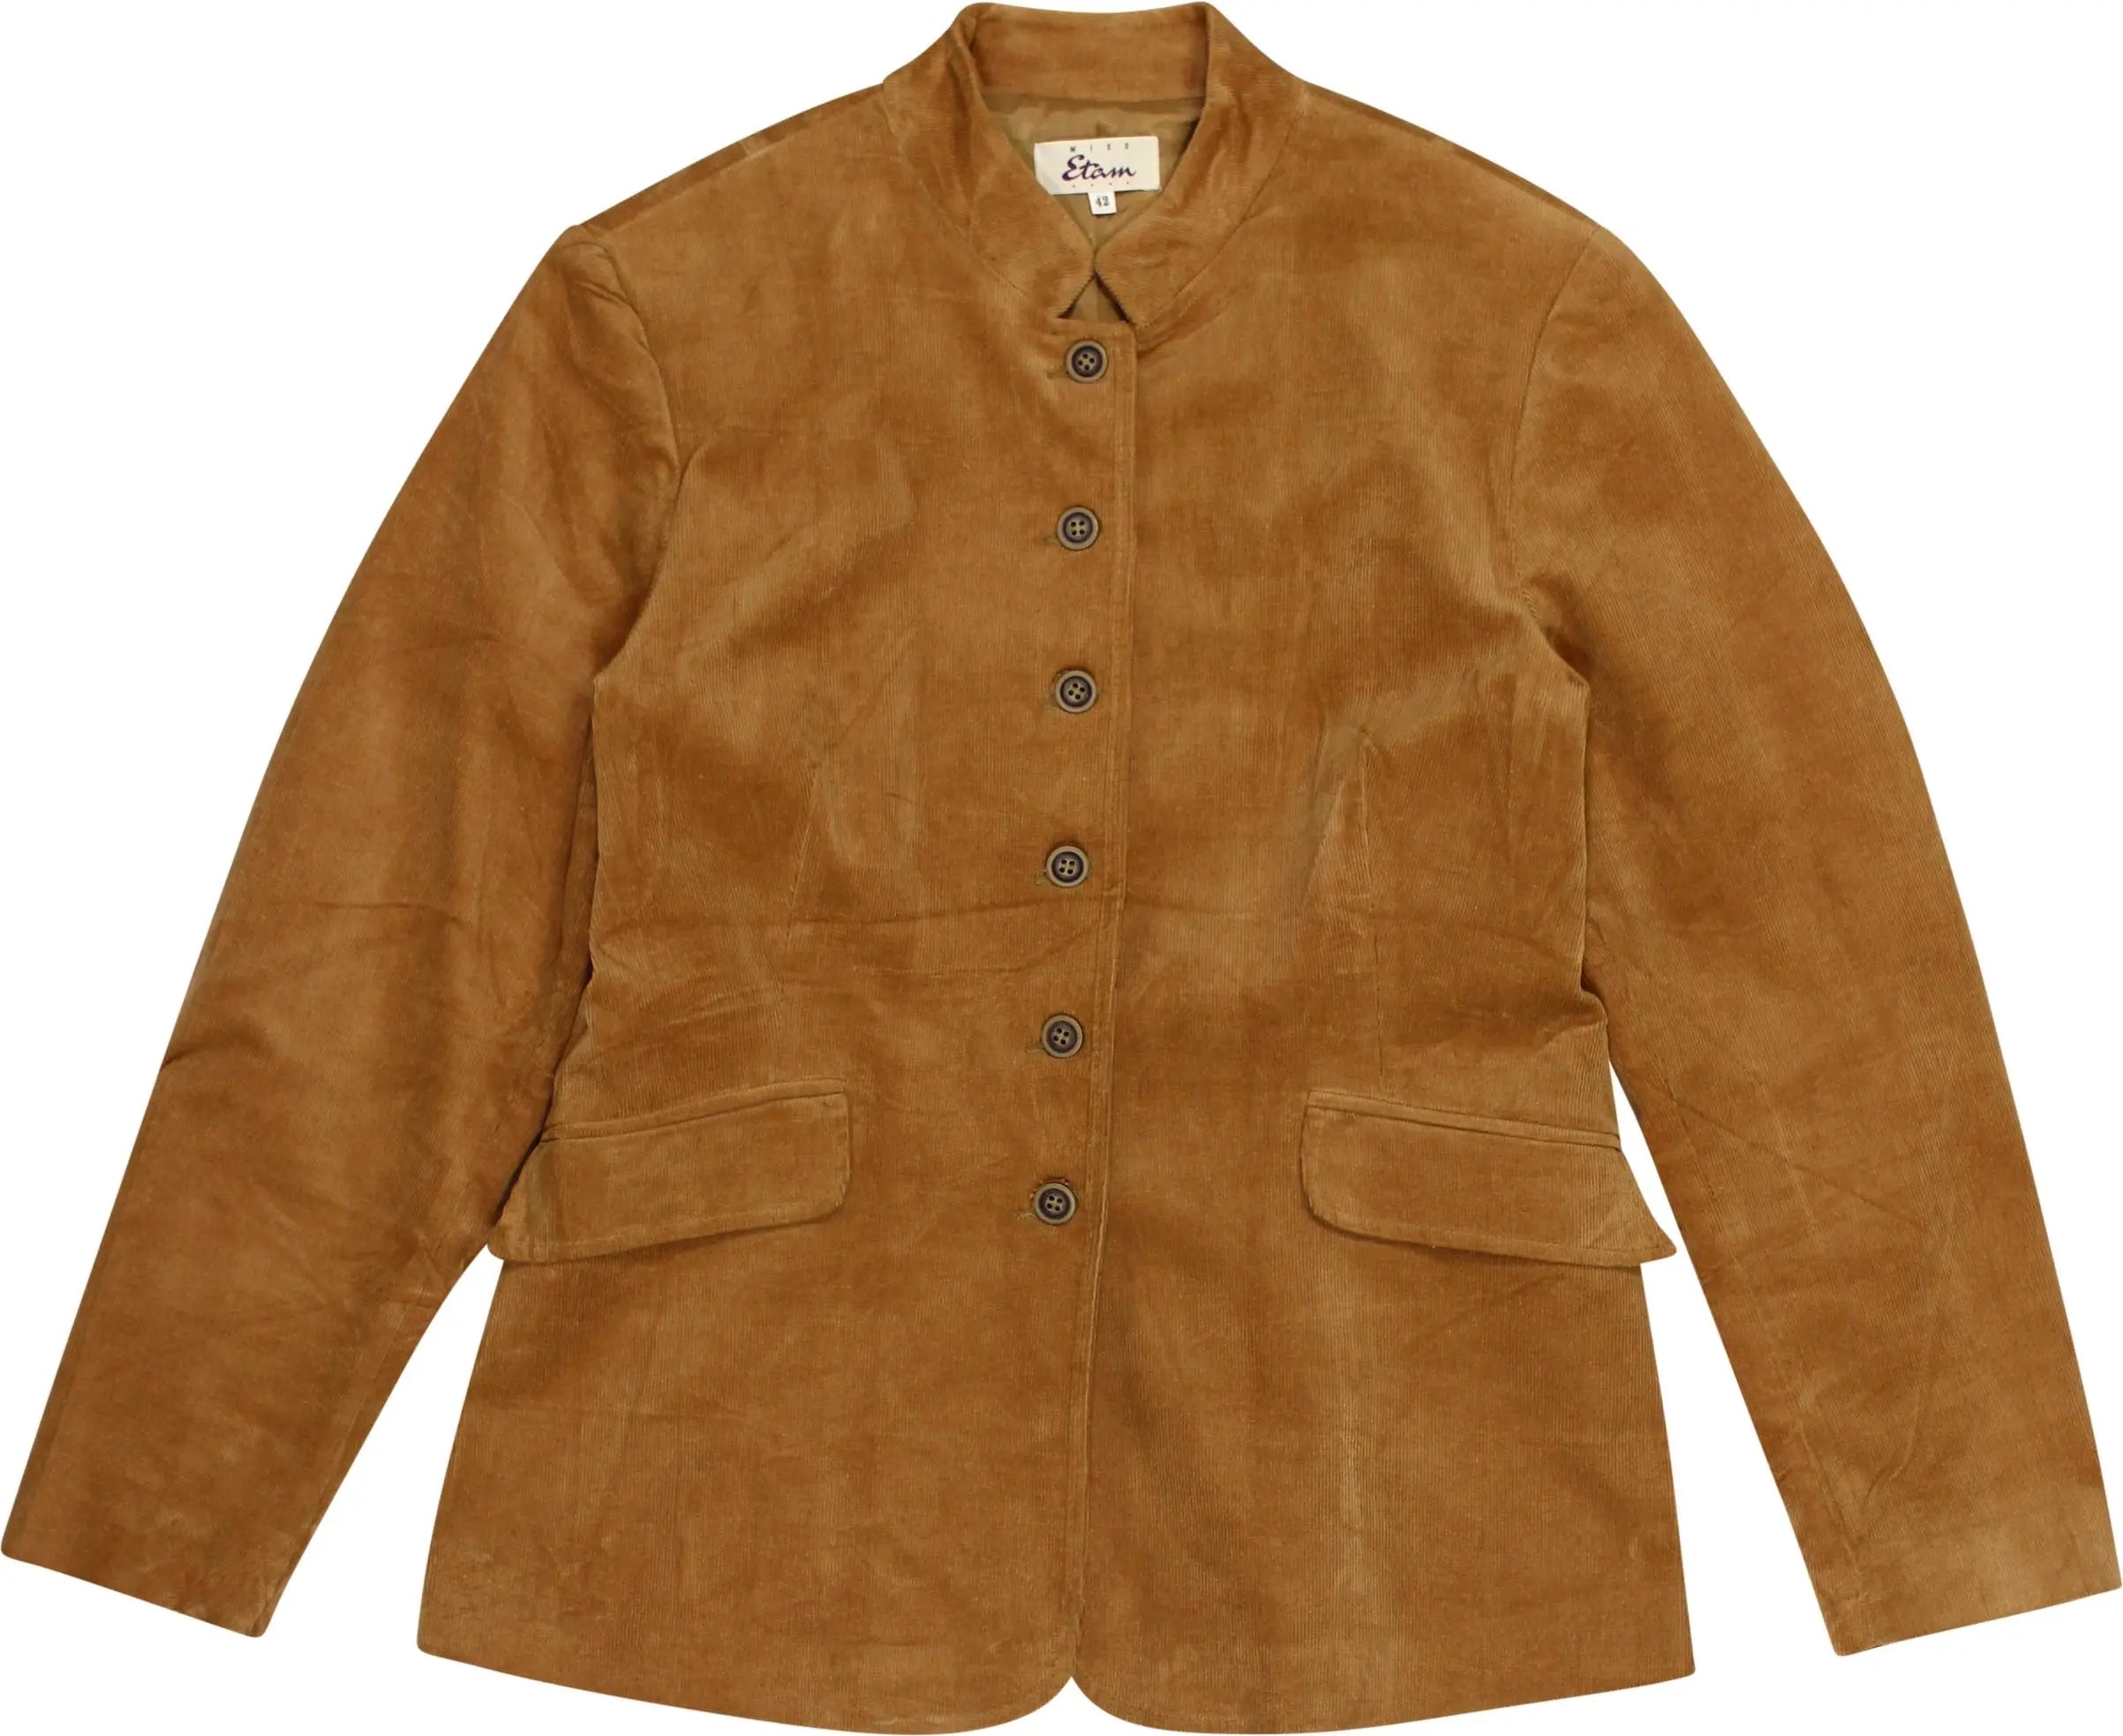 Miss Etam - Work Wear Inspired Corduroy Jacket- ThriftTale.com - Vintage and second handclothing